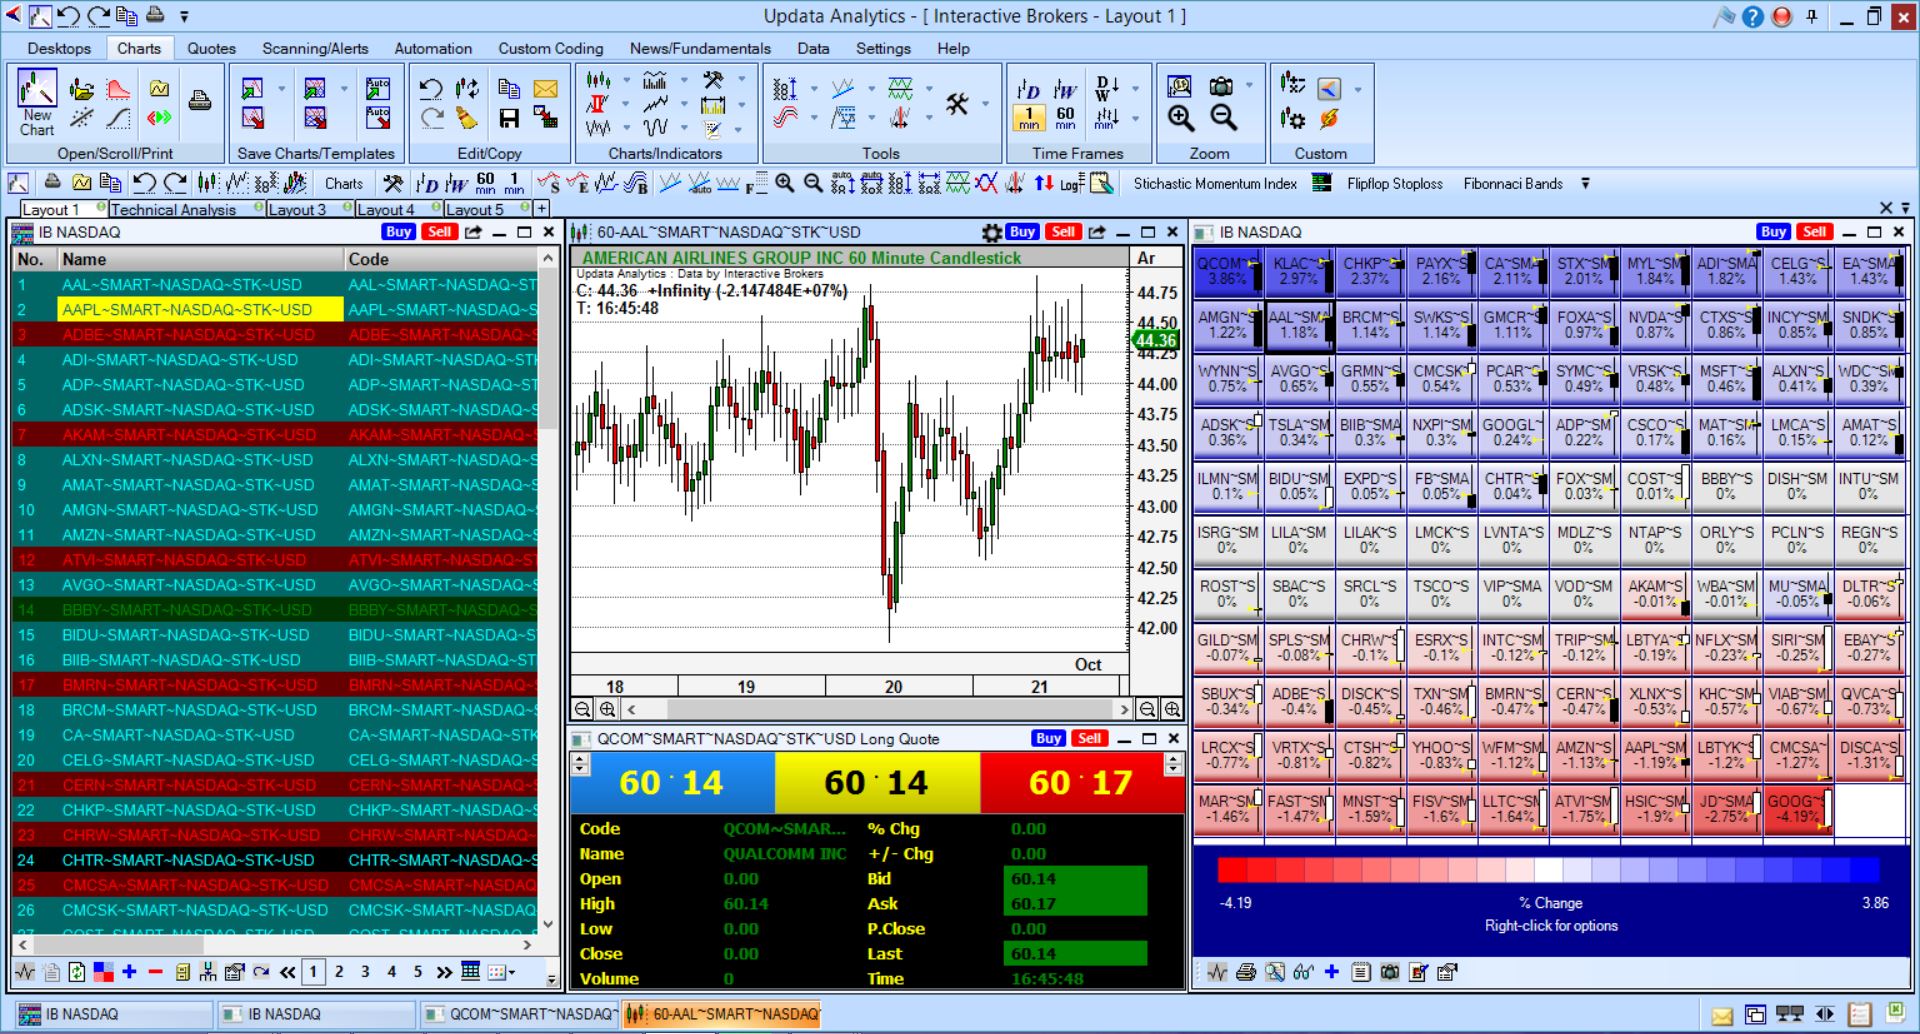 Trading options interactive brokers - yukabolypohe.web.fc2.com